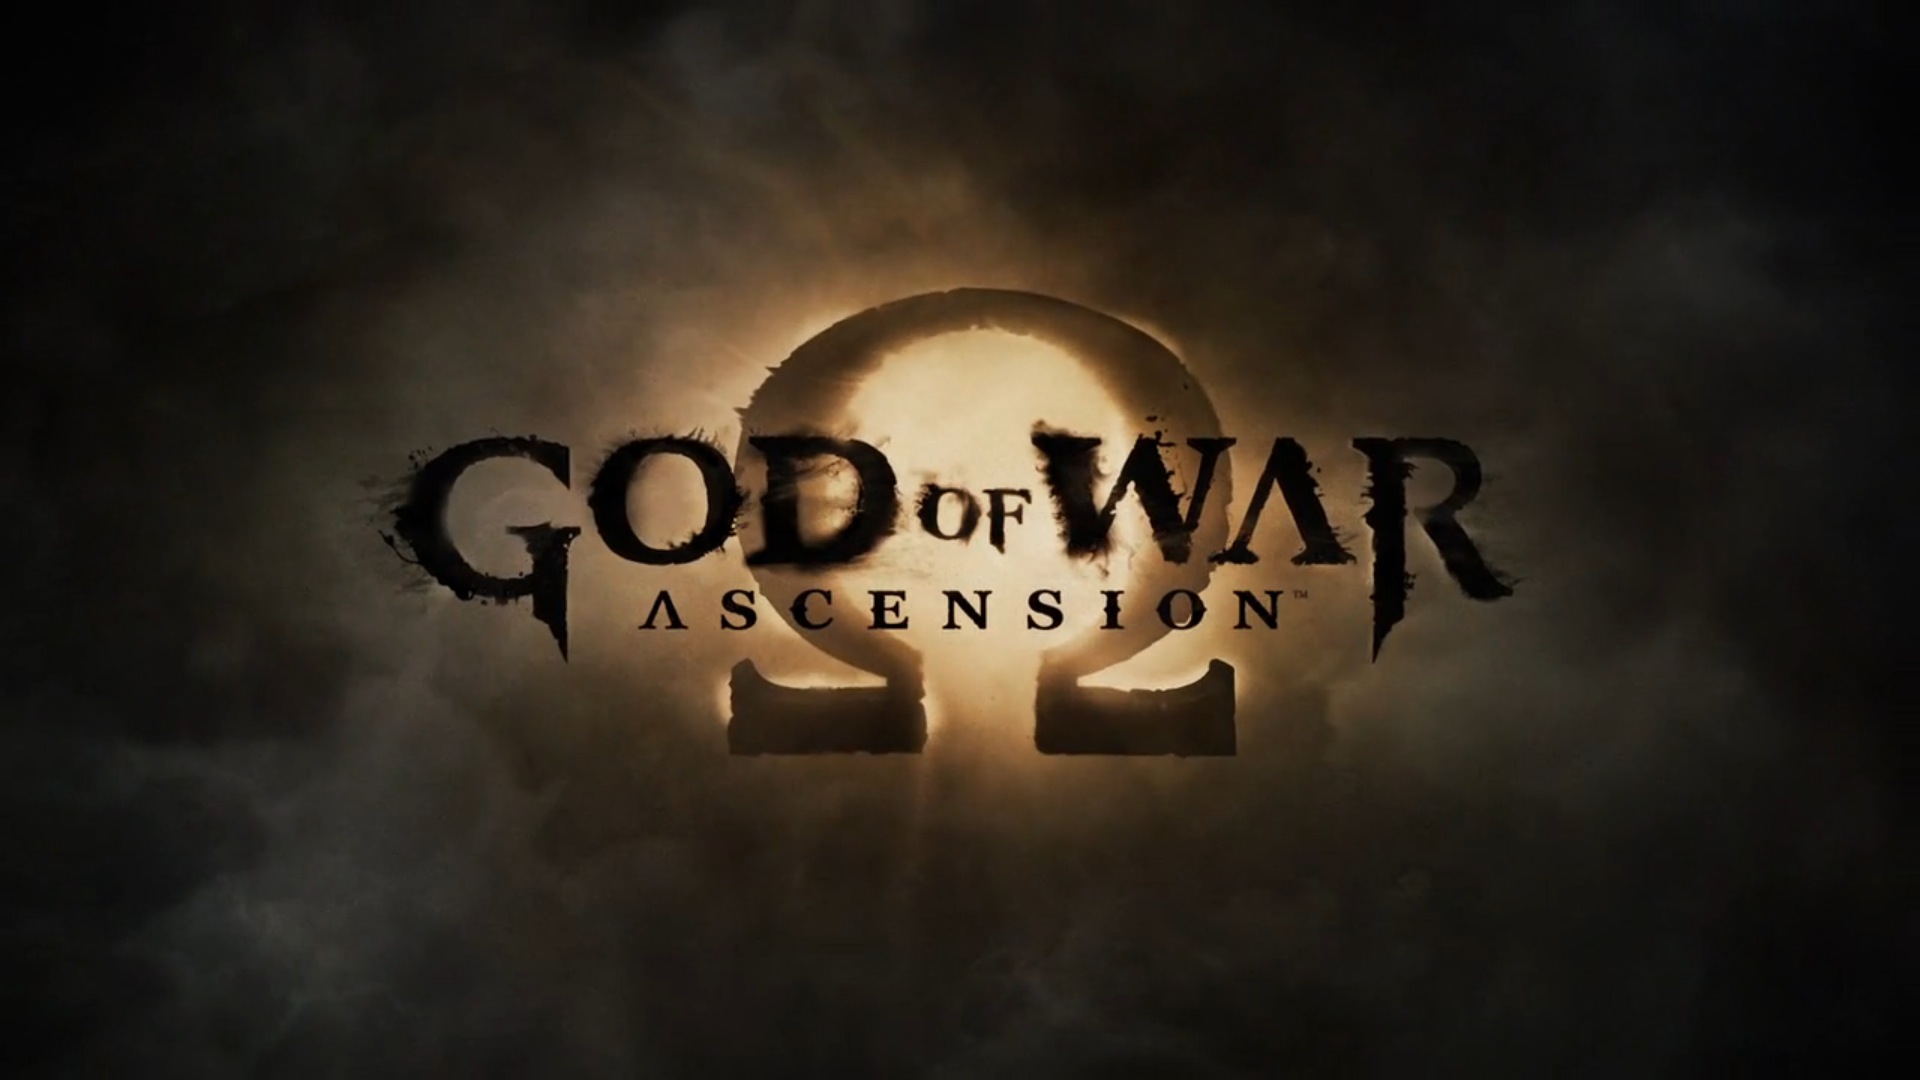 God of War Trailer1